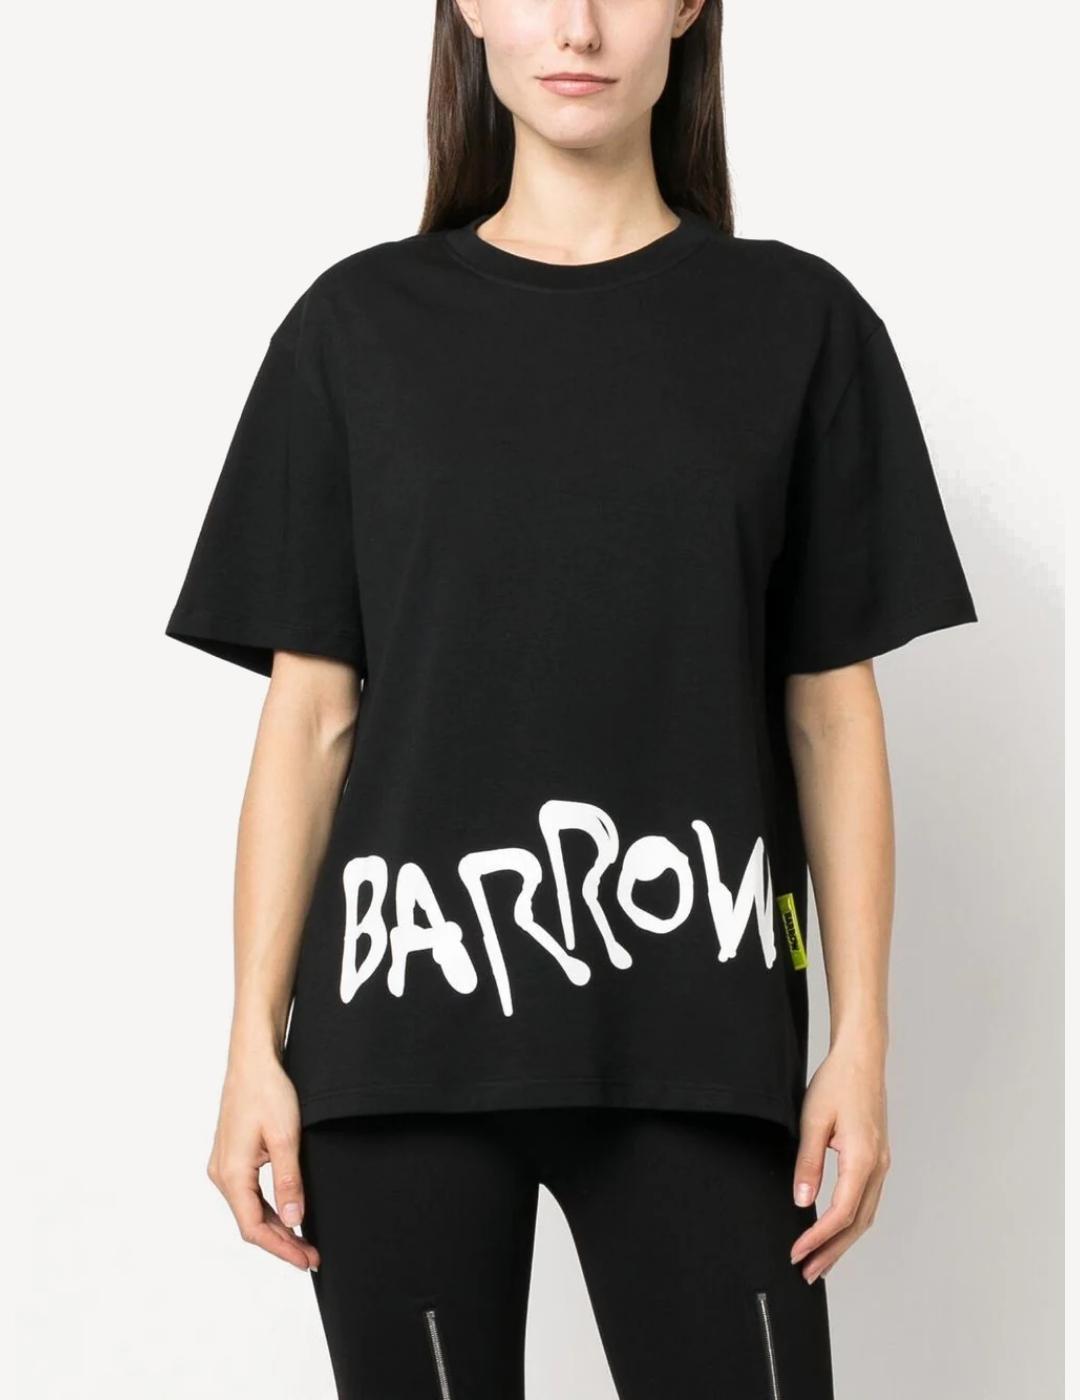 Camiseta Barrow teddy negra unisex